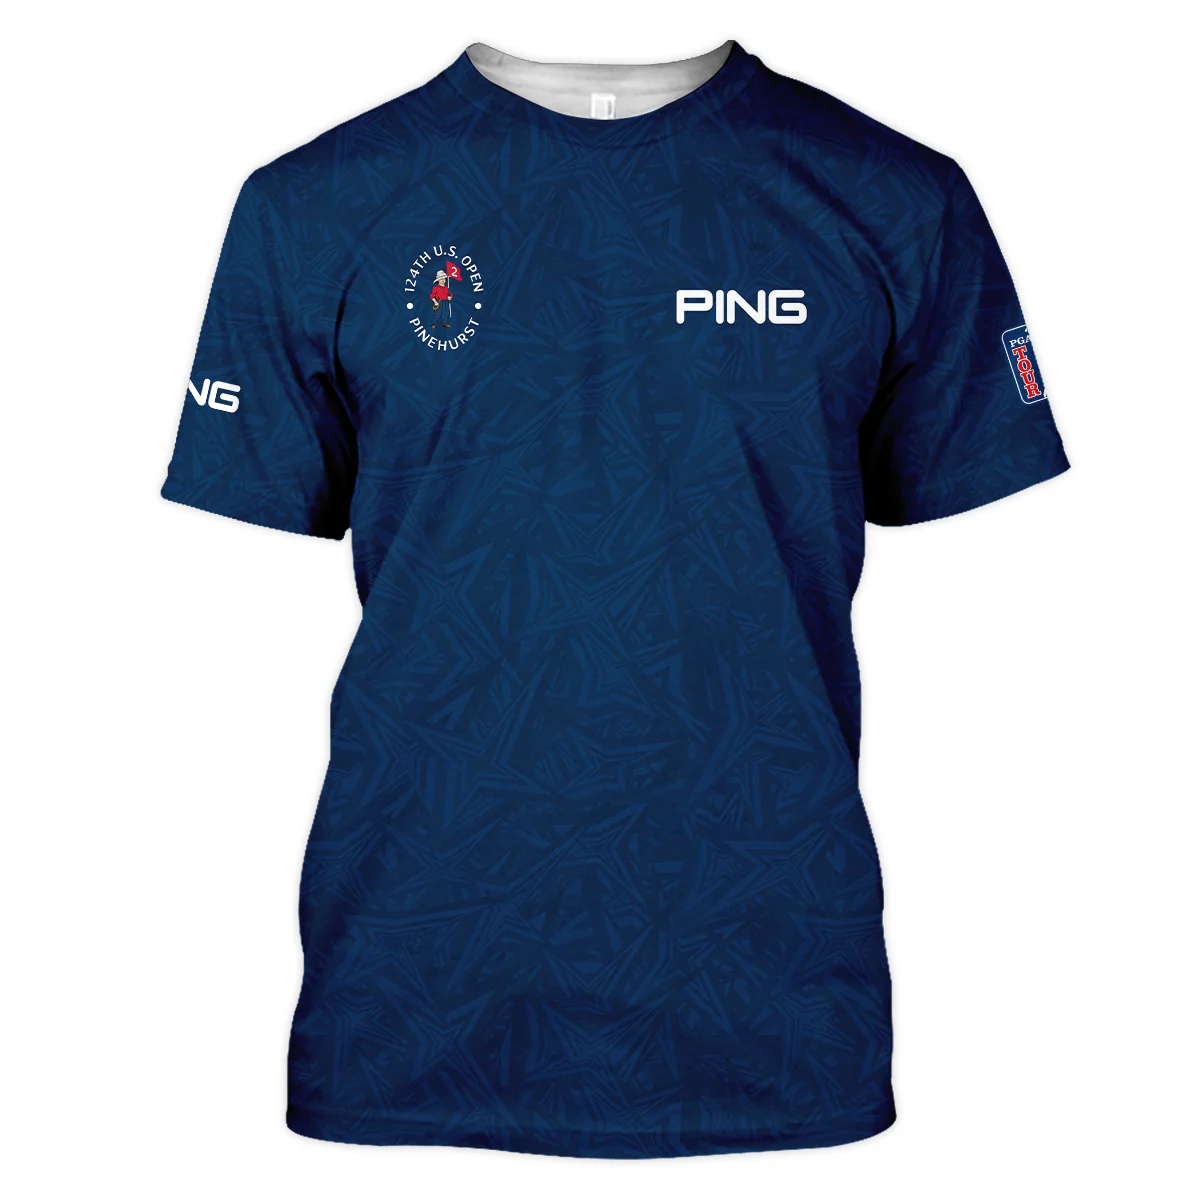 Ping 124th U.S. Open Pinehurst Stars Gradient Pattern Dark Blue Unisex T-Shirt Style Classic T-Shirt